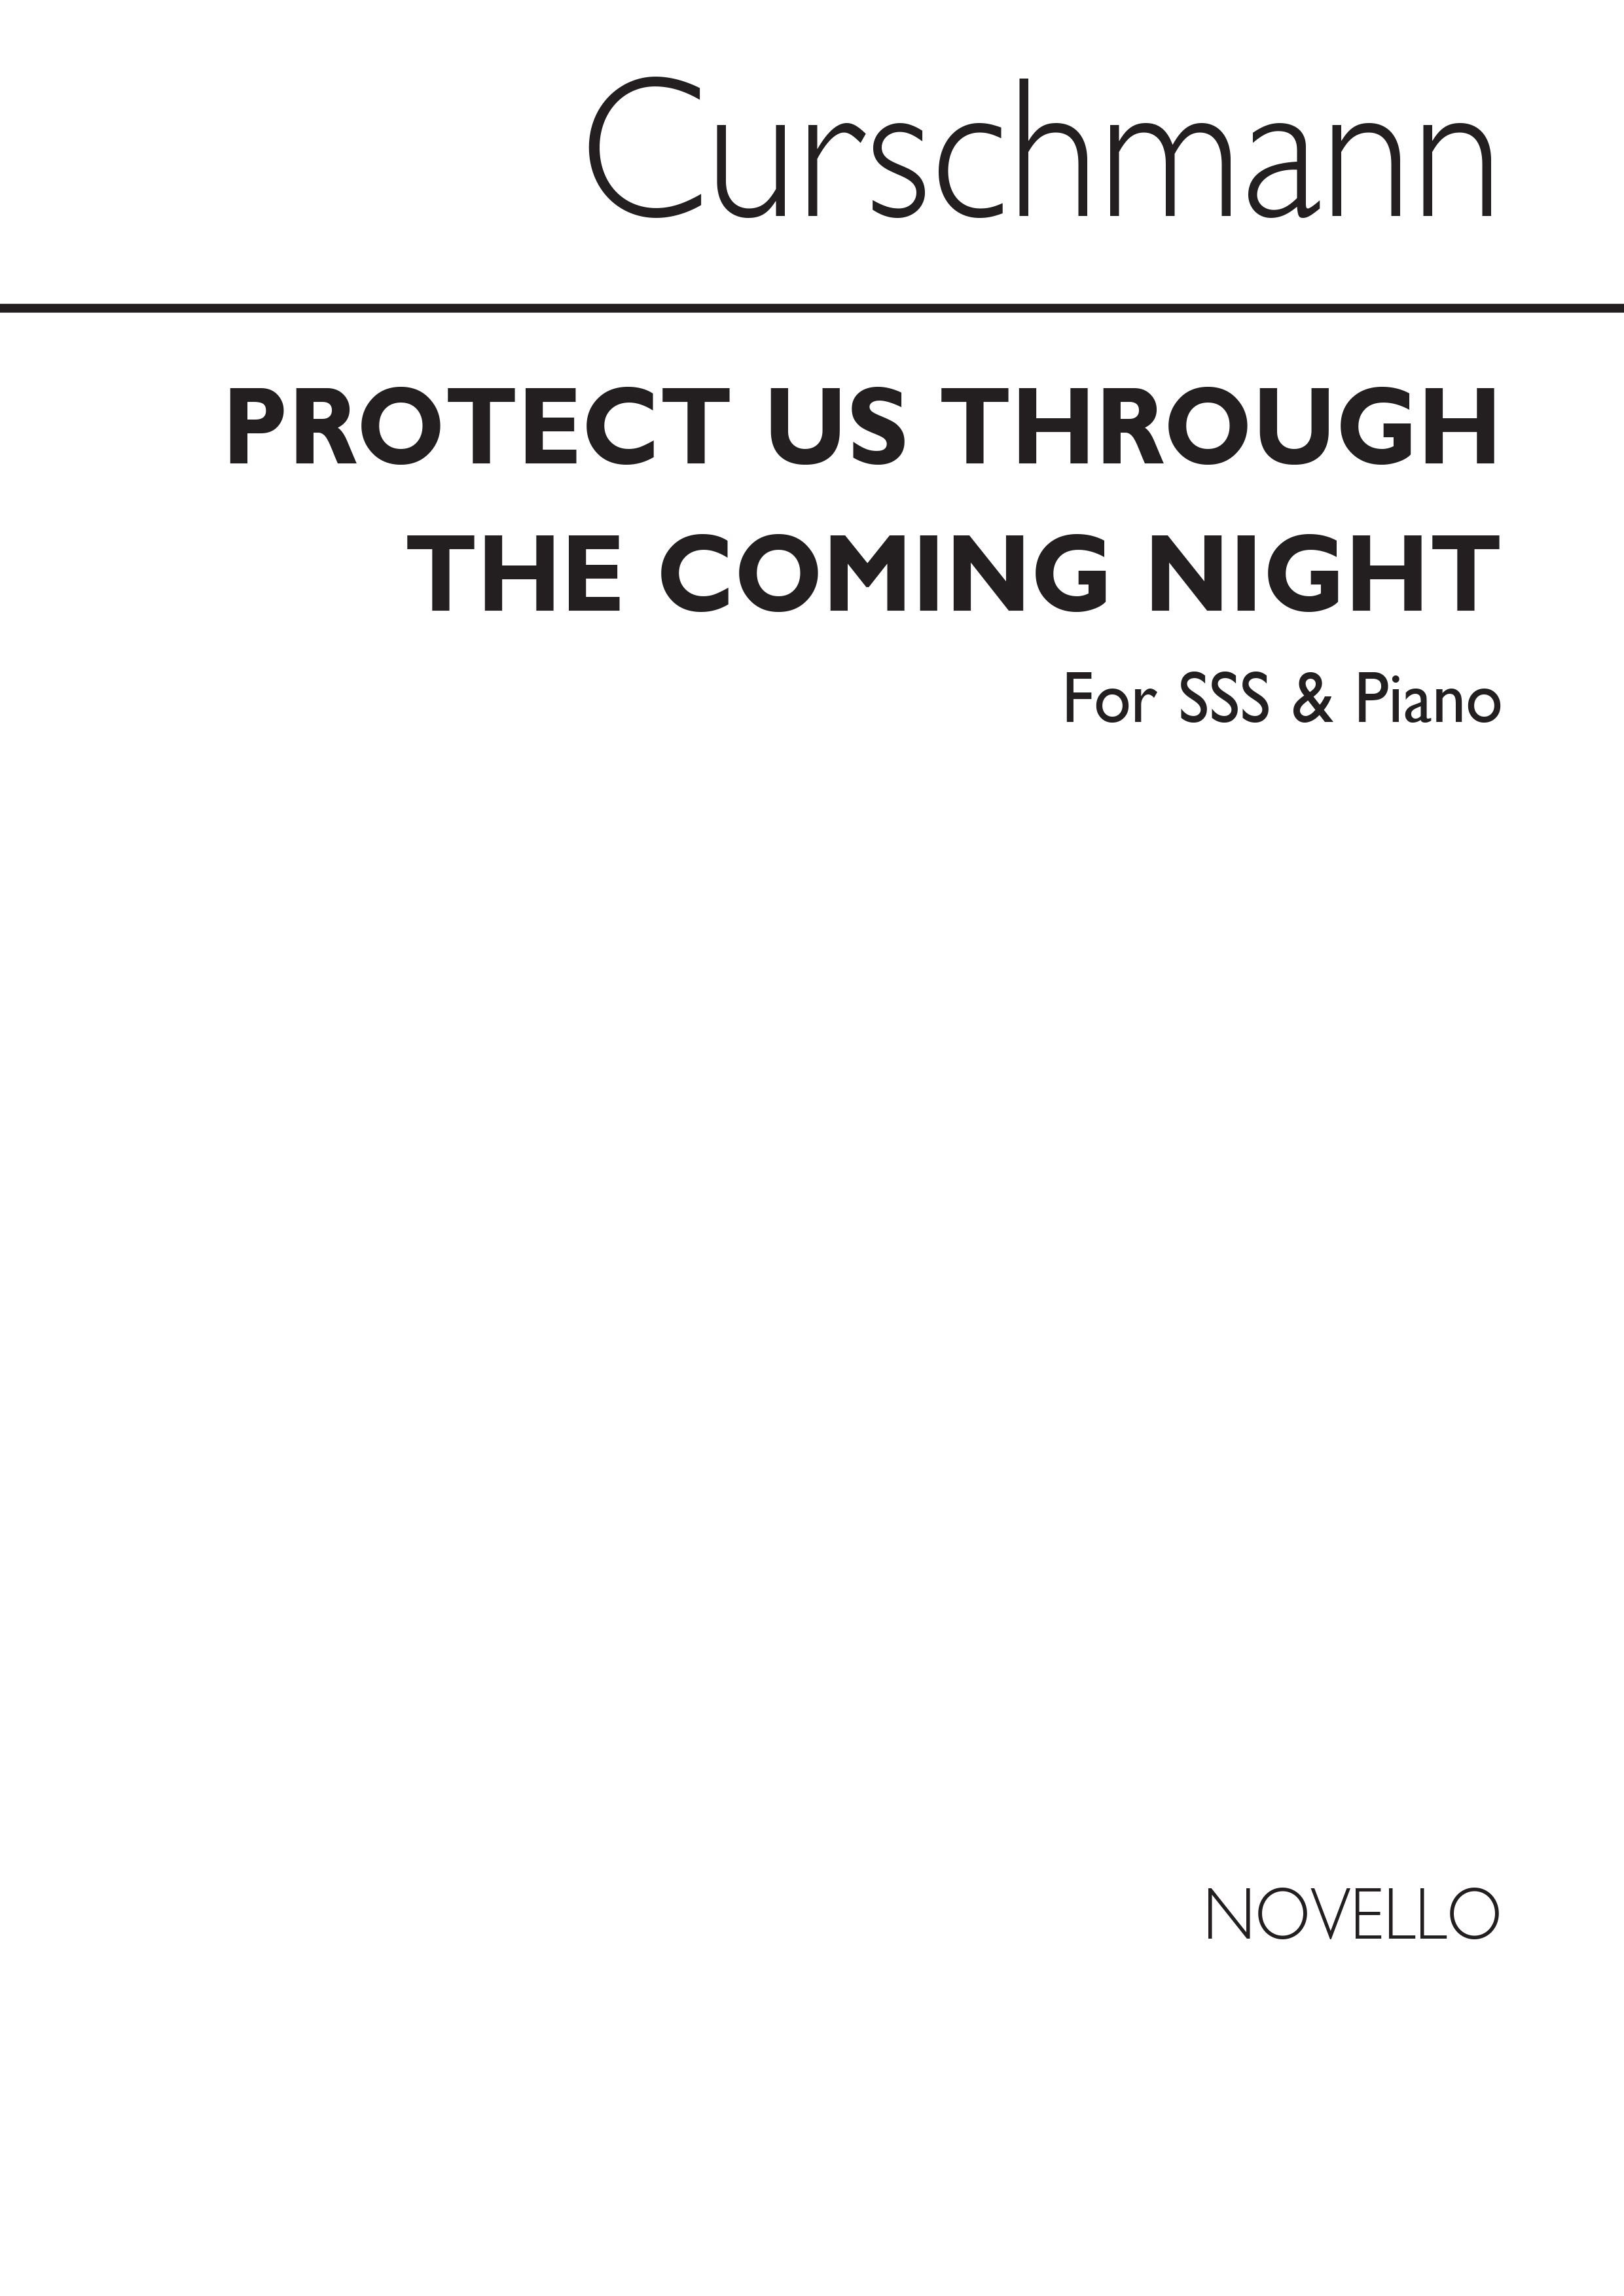 Karl Friedrich Curschmann: Protect Us Through The Coming Night (Arr. Novello):